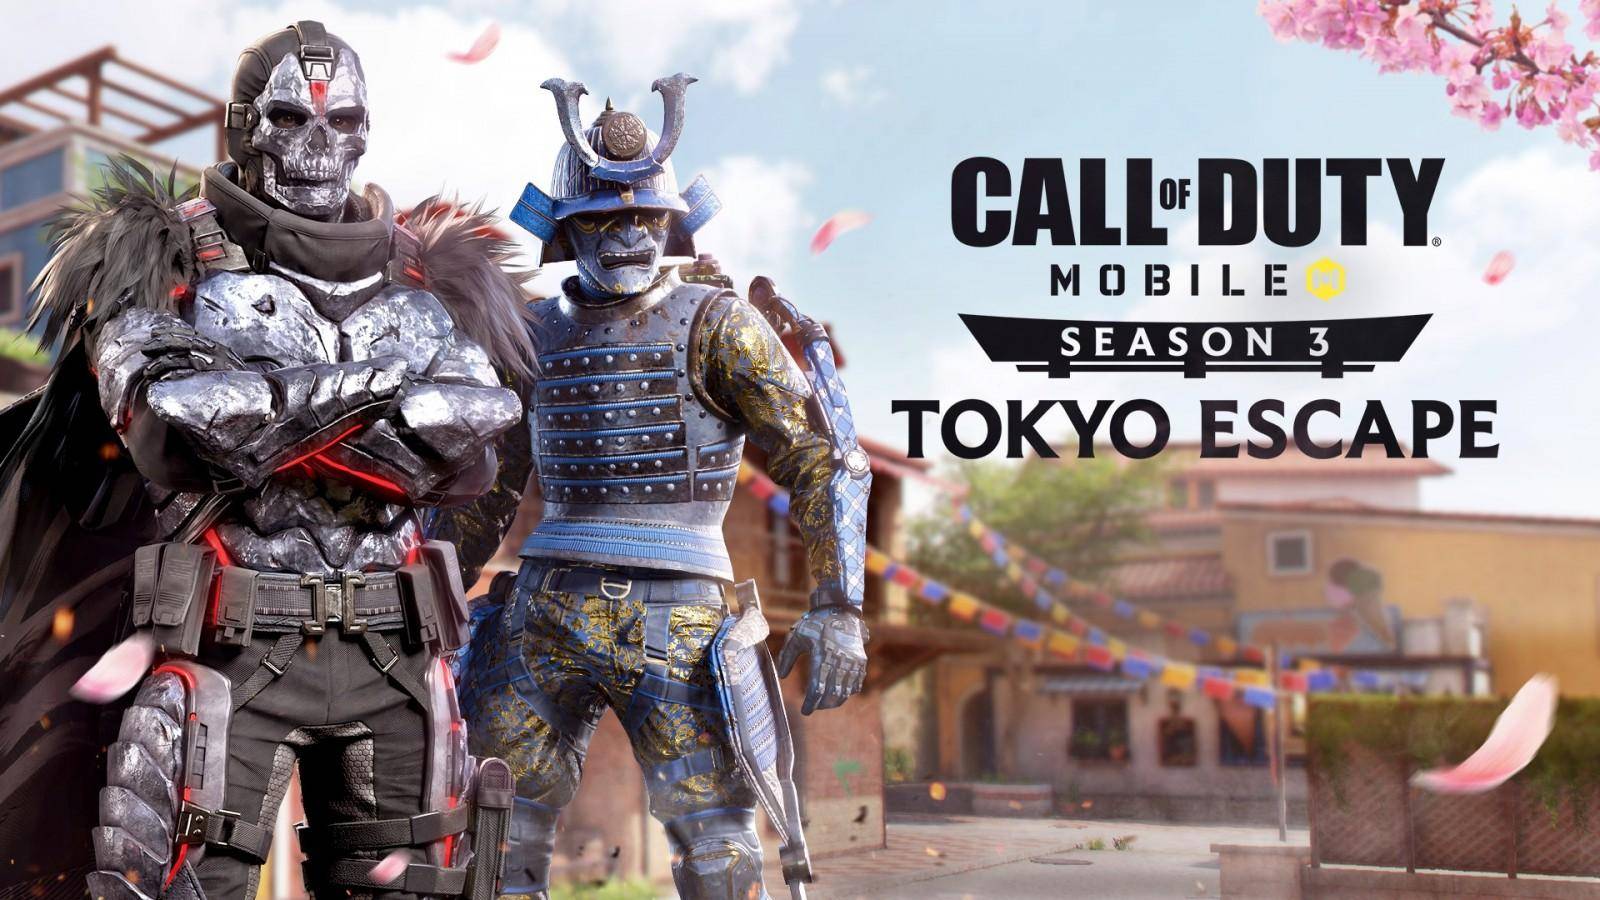 Call of duty mobile tokyo escape